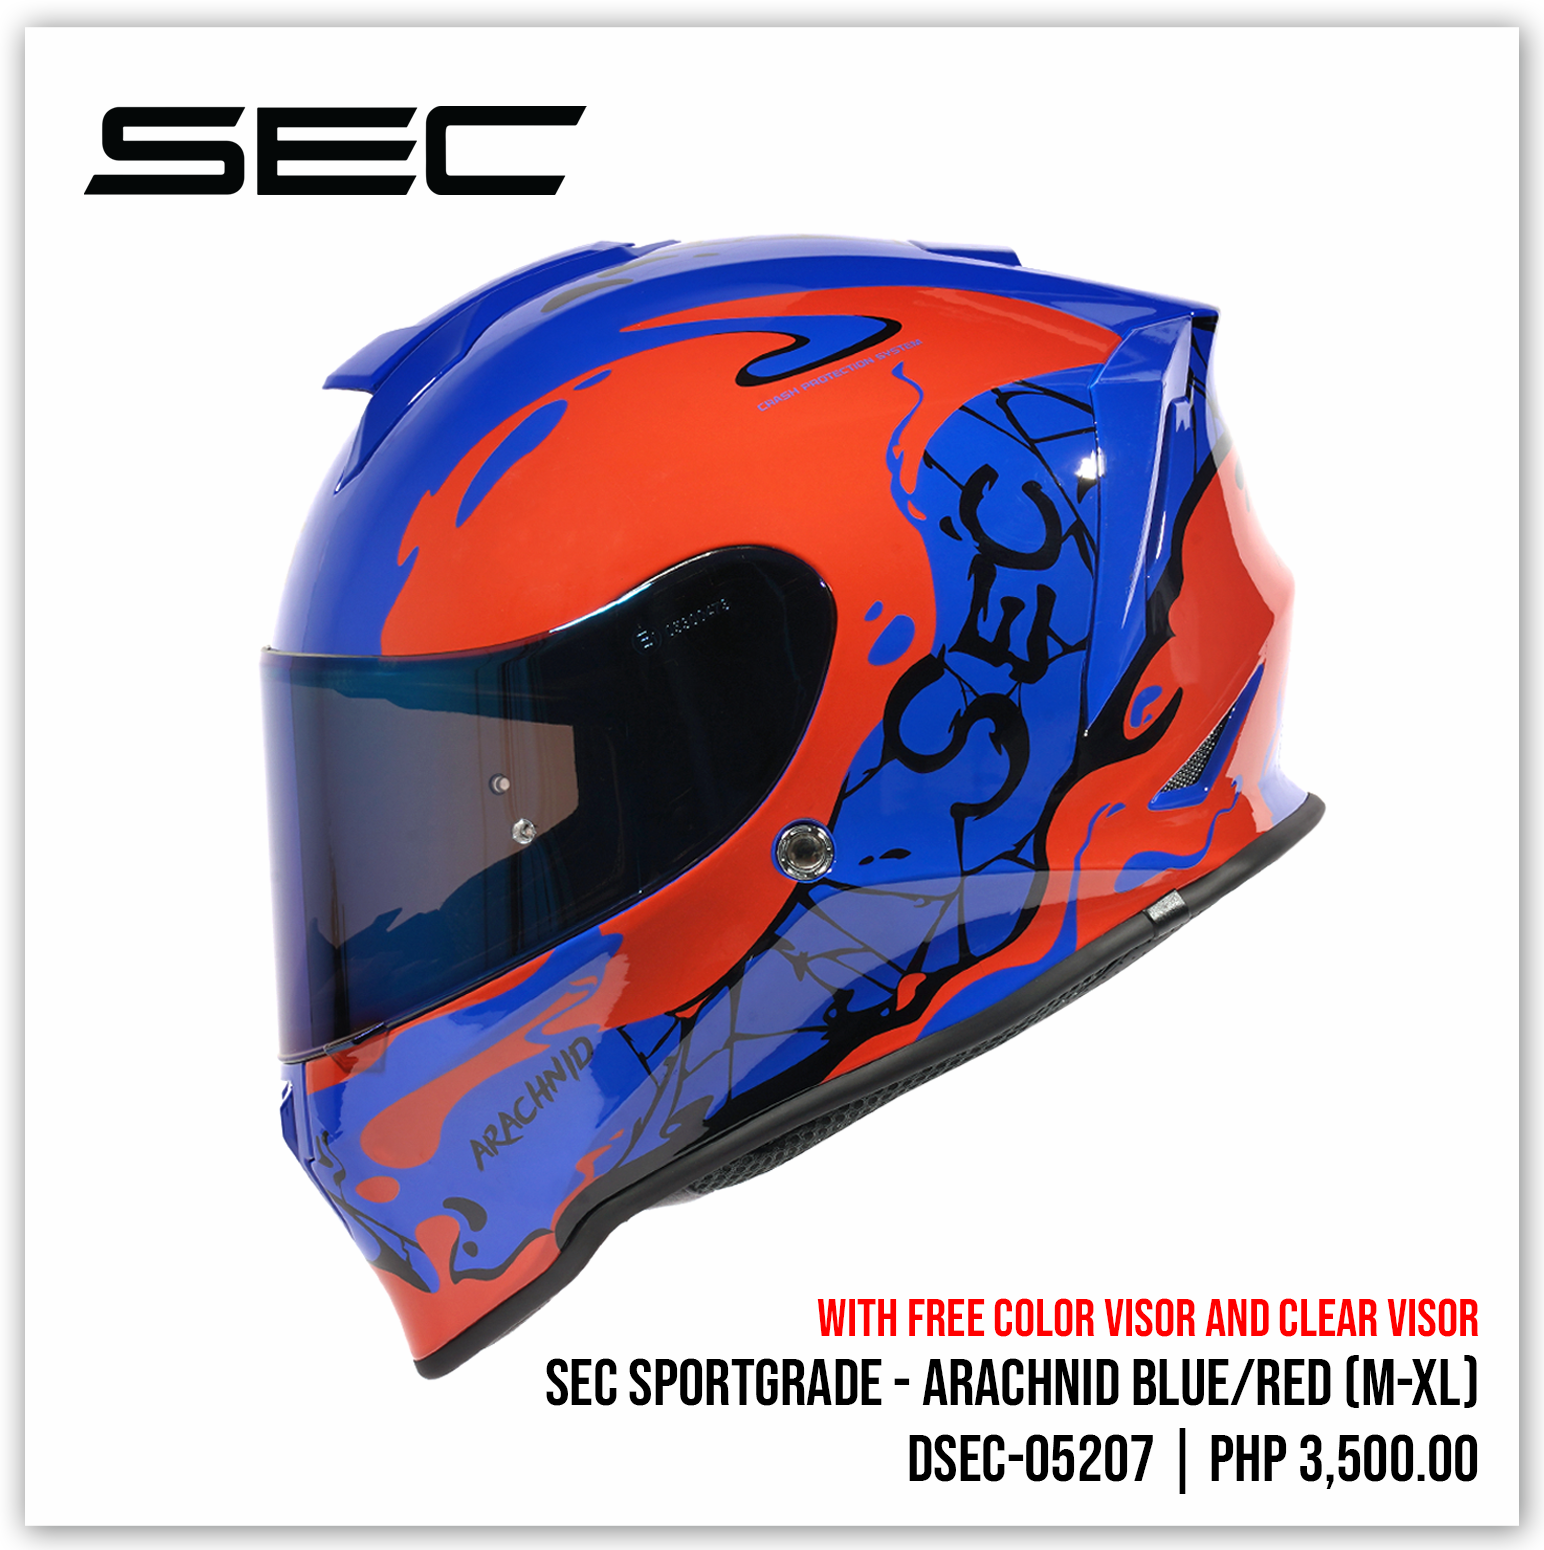 SEC Sportgrade - Arachnid BLU/RED